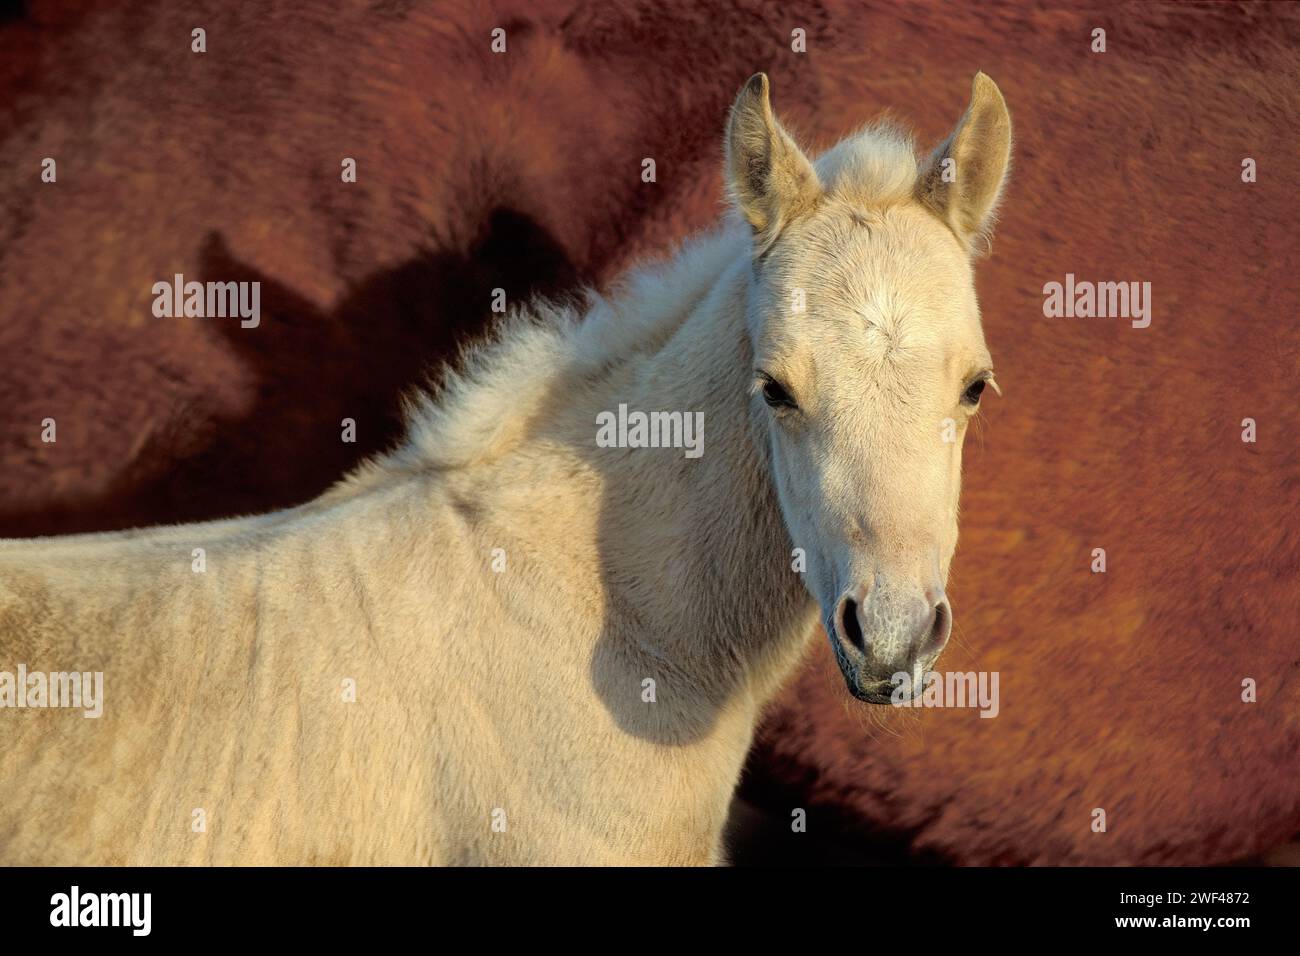 Ears pricked white foal, blonde, staring, looking alert Stock Photo